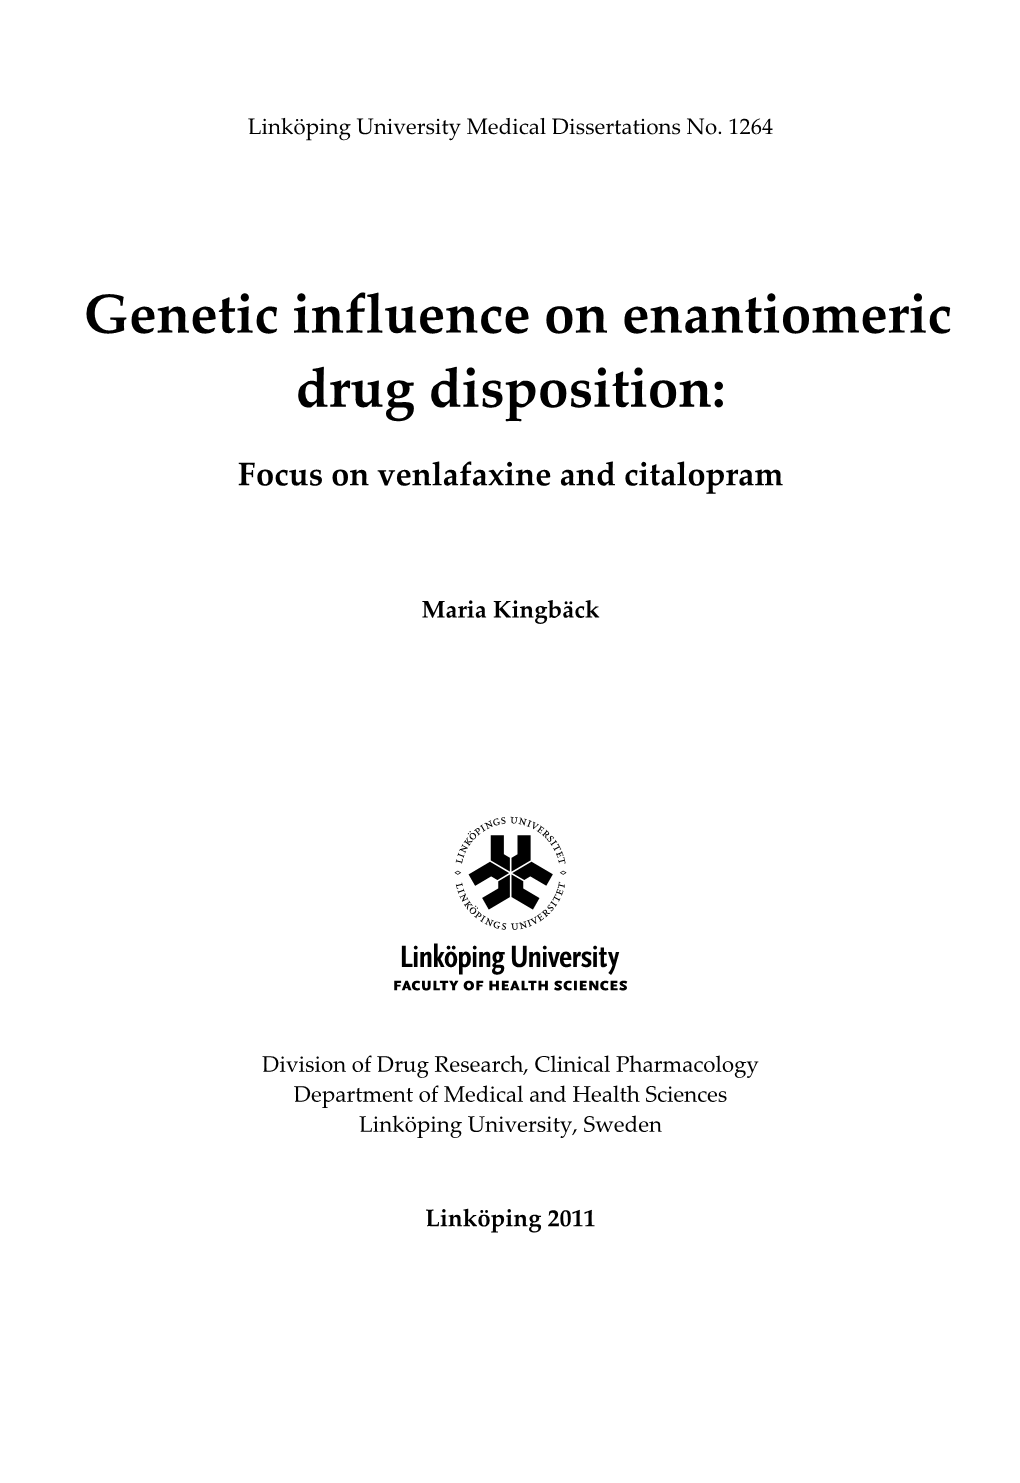 Genetic Influence on Enantiomeric Drug Disposition: Focus on Venlafaxine and Citalopram